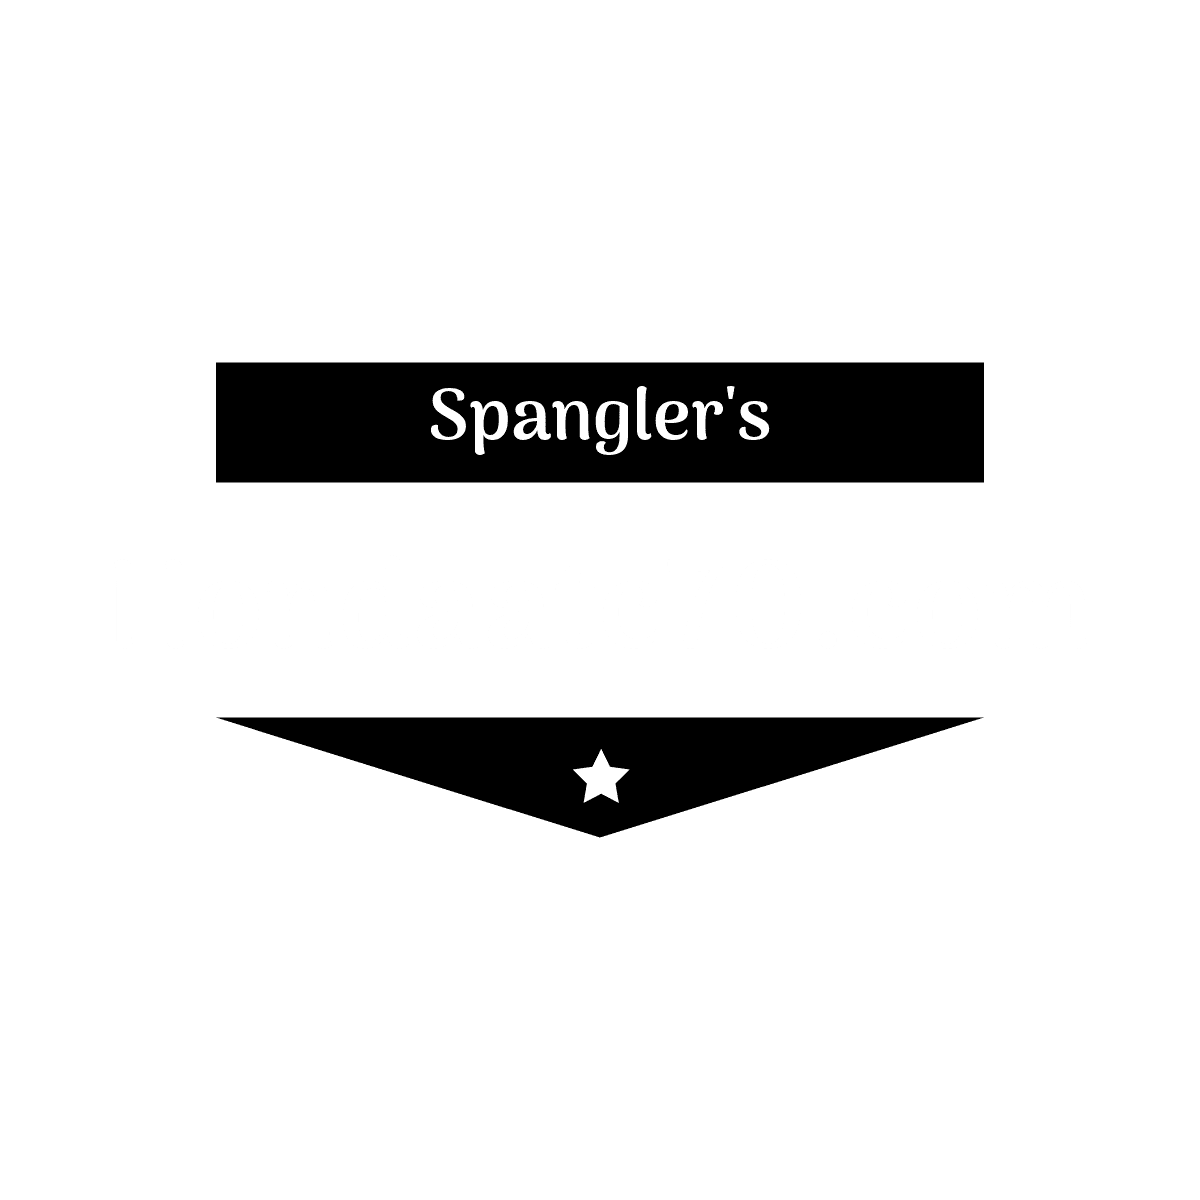 Hondaatc70.com Gift card